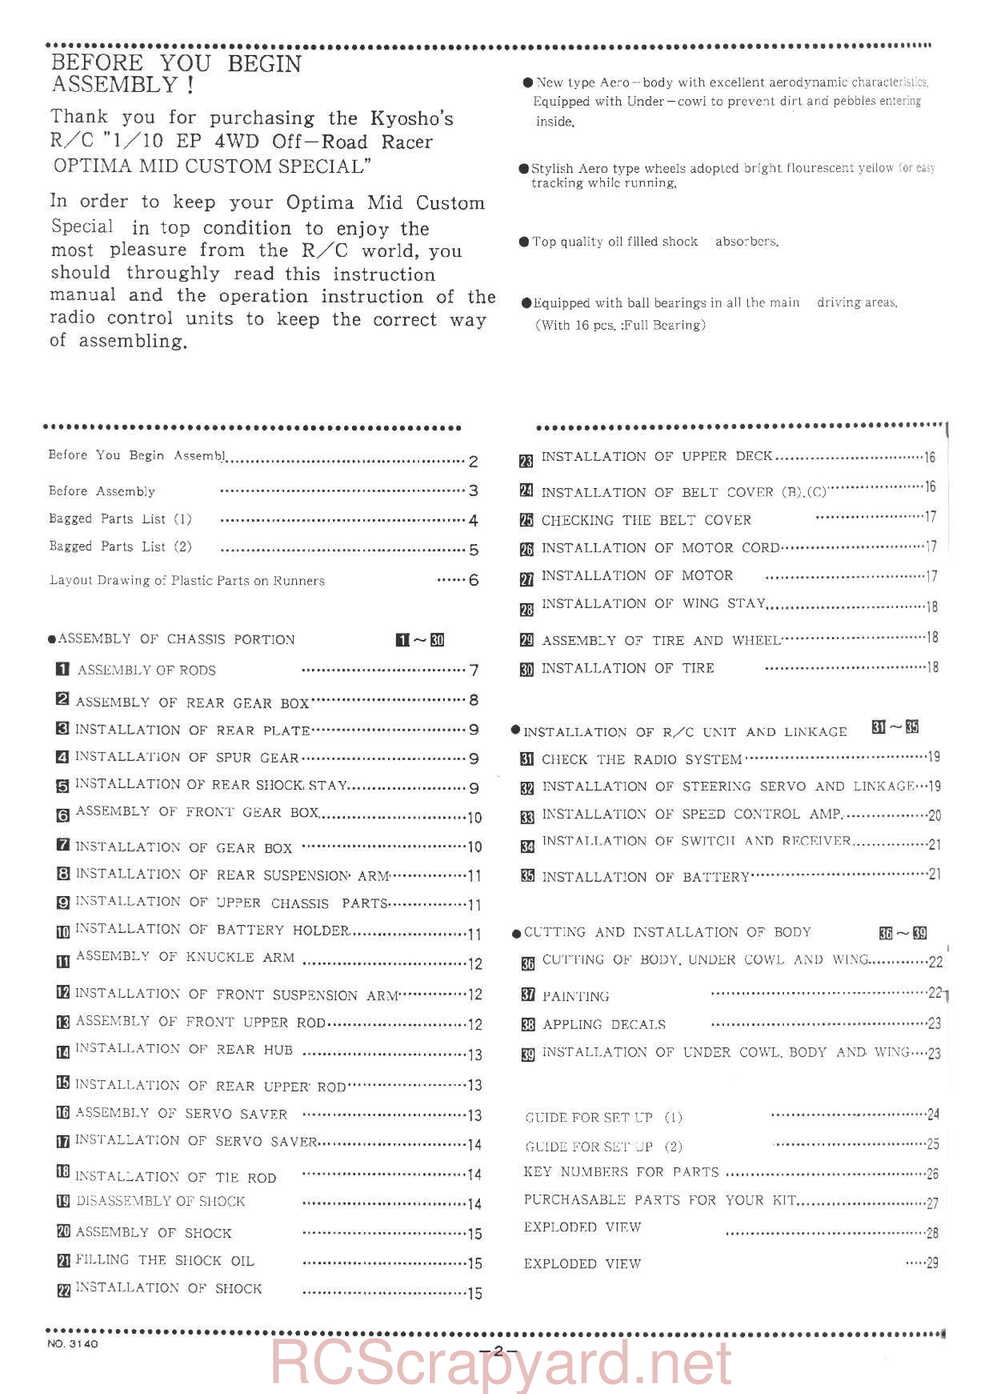 Kyosho - 3140FG - Optima-Mid Custom Special - Manual - Page 02